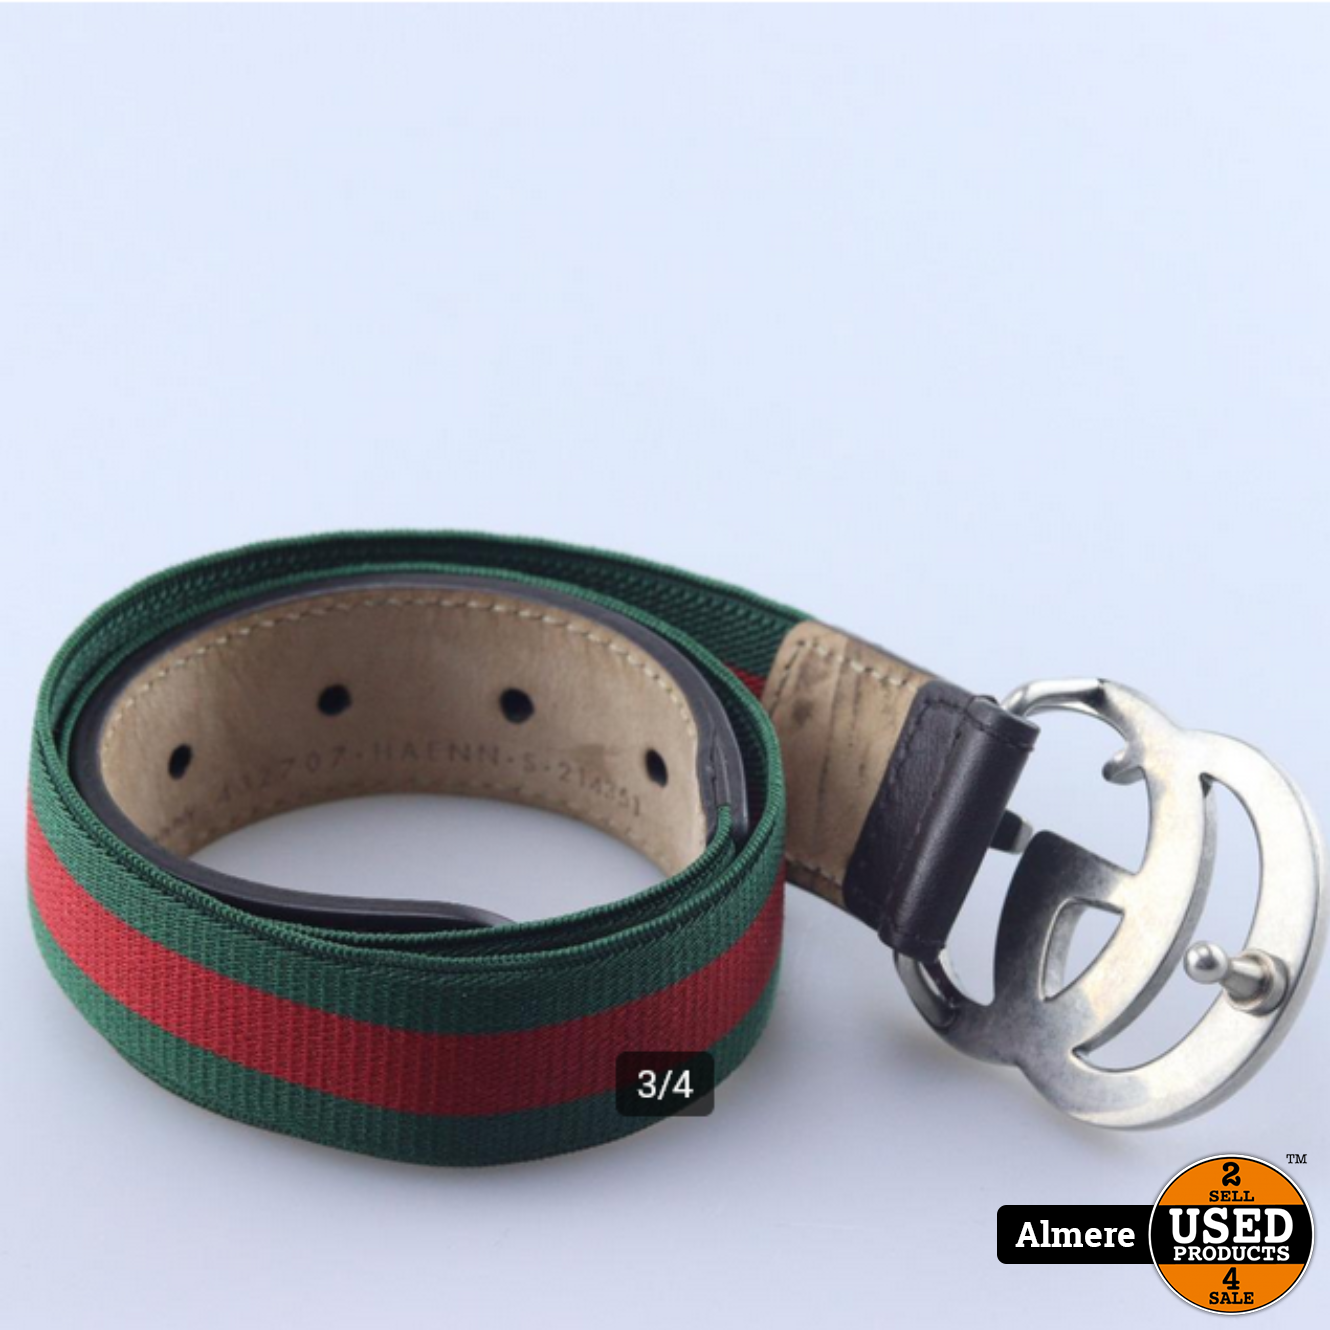 Children's elastic Web belt